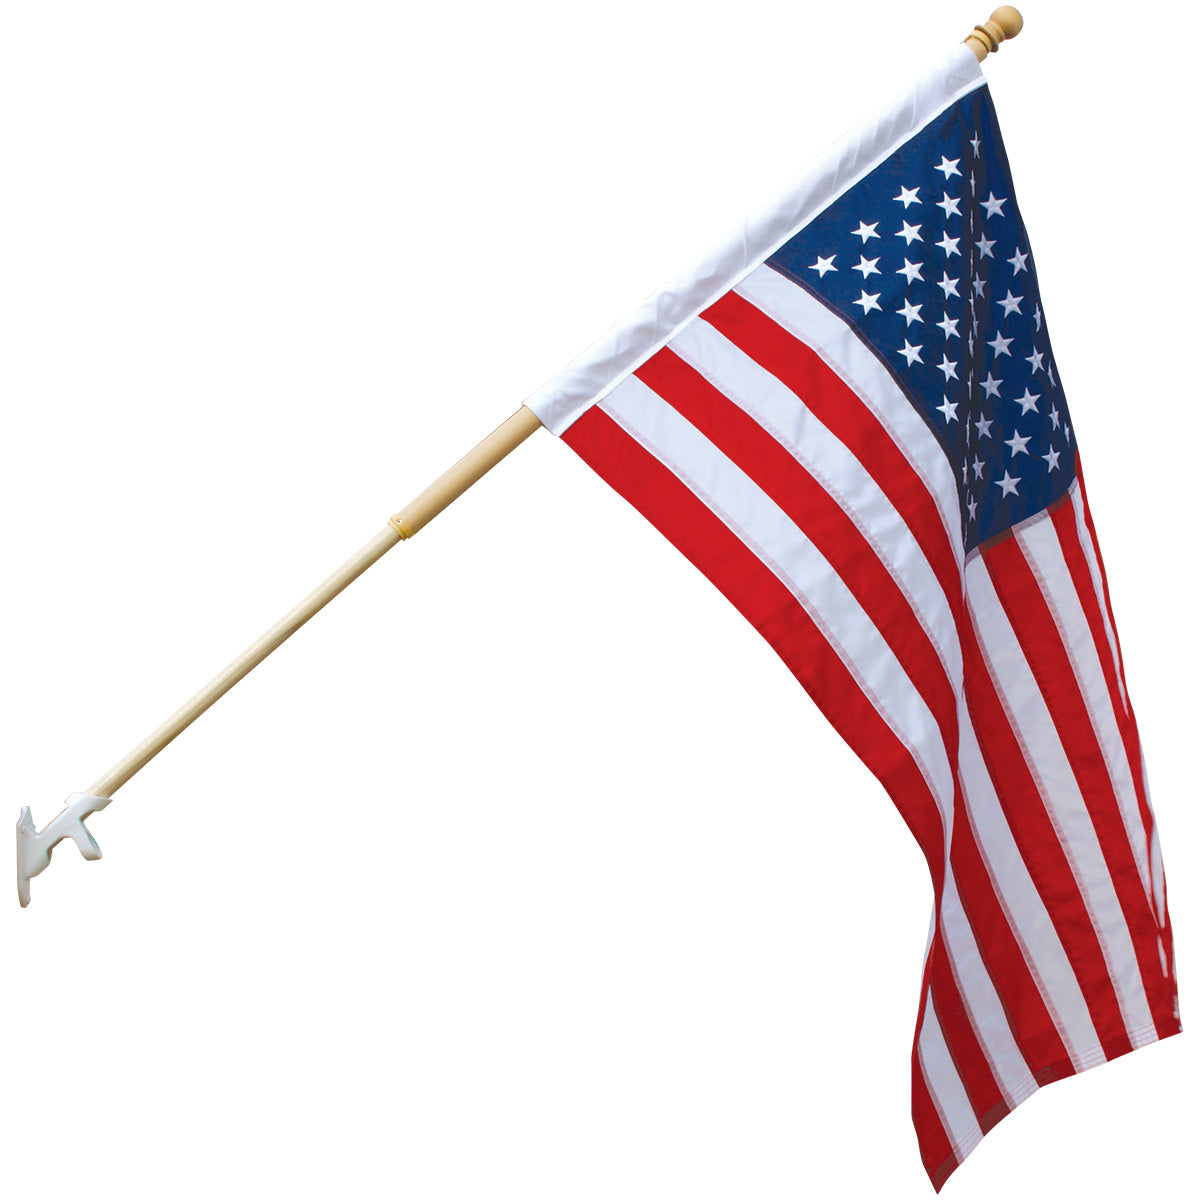 3'x5' Endura Nylon Outdoor U.S. Banner Flag